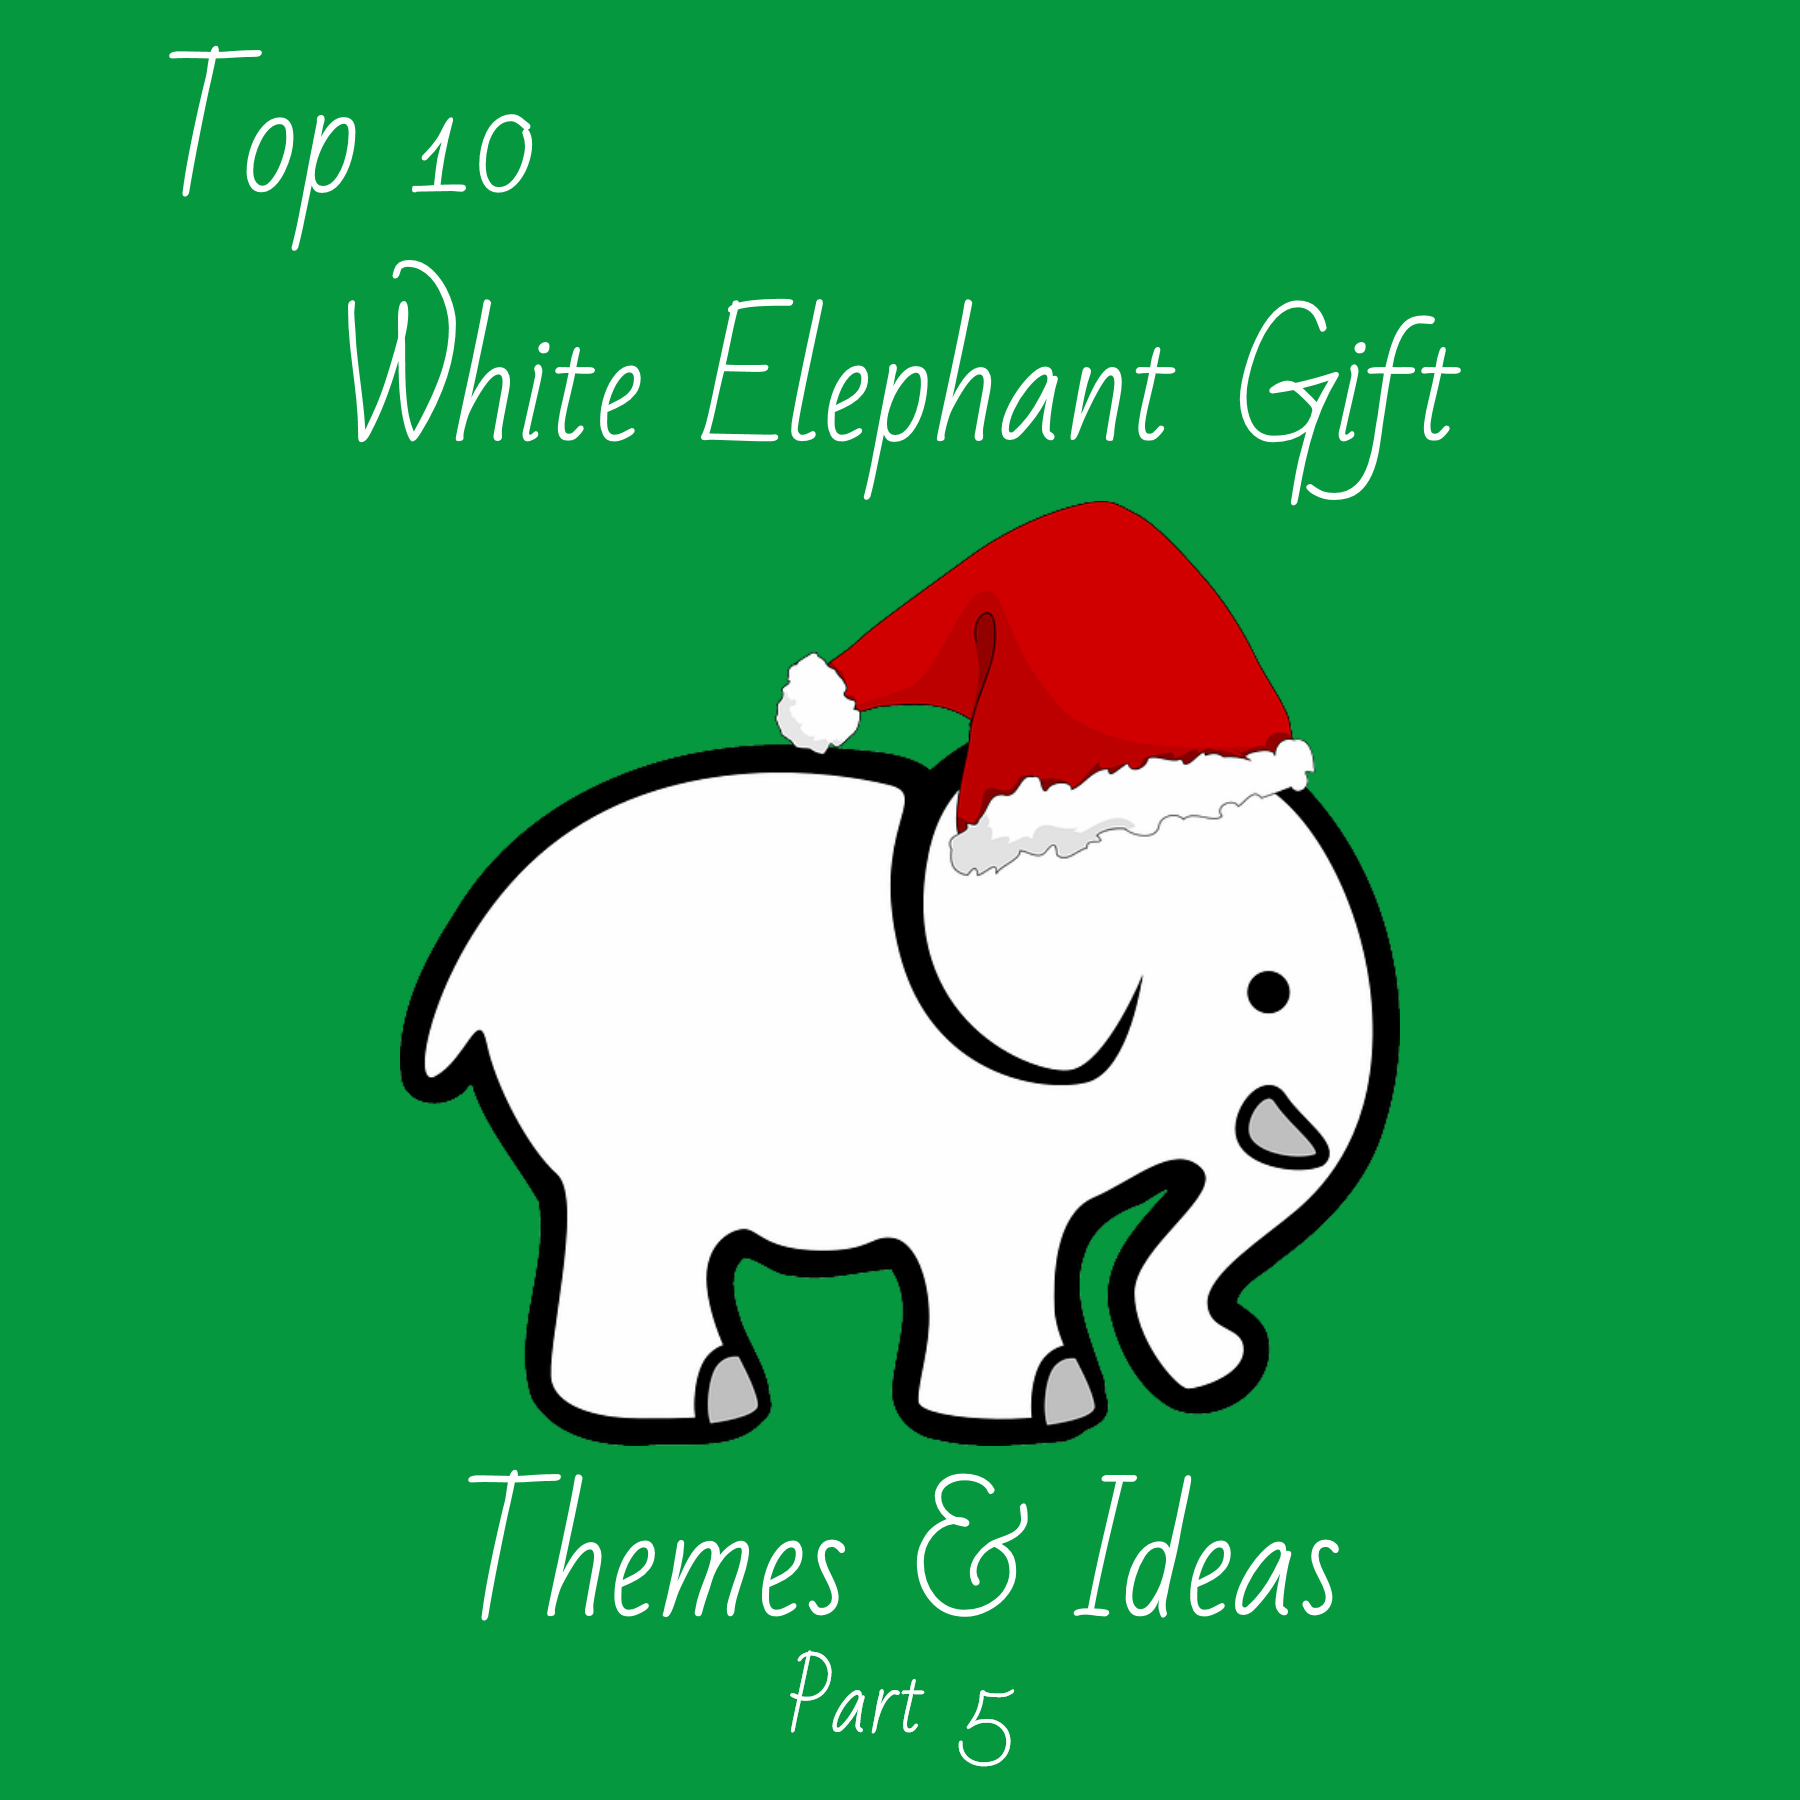 Fun White Elephant gifts part 5